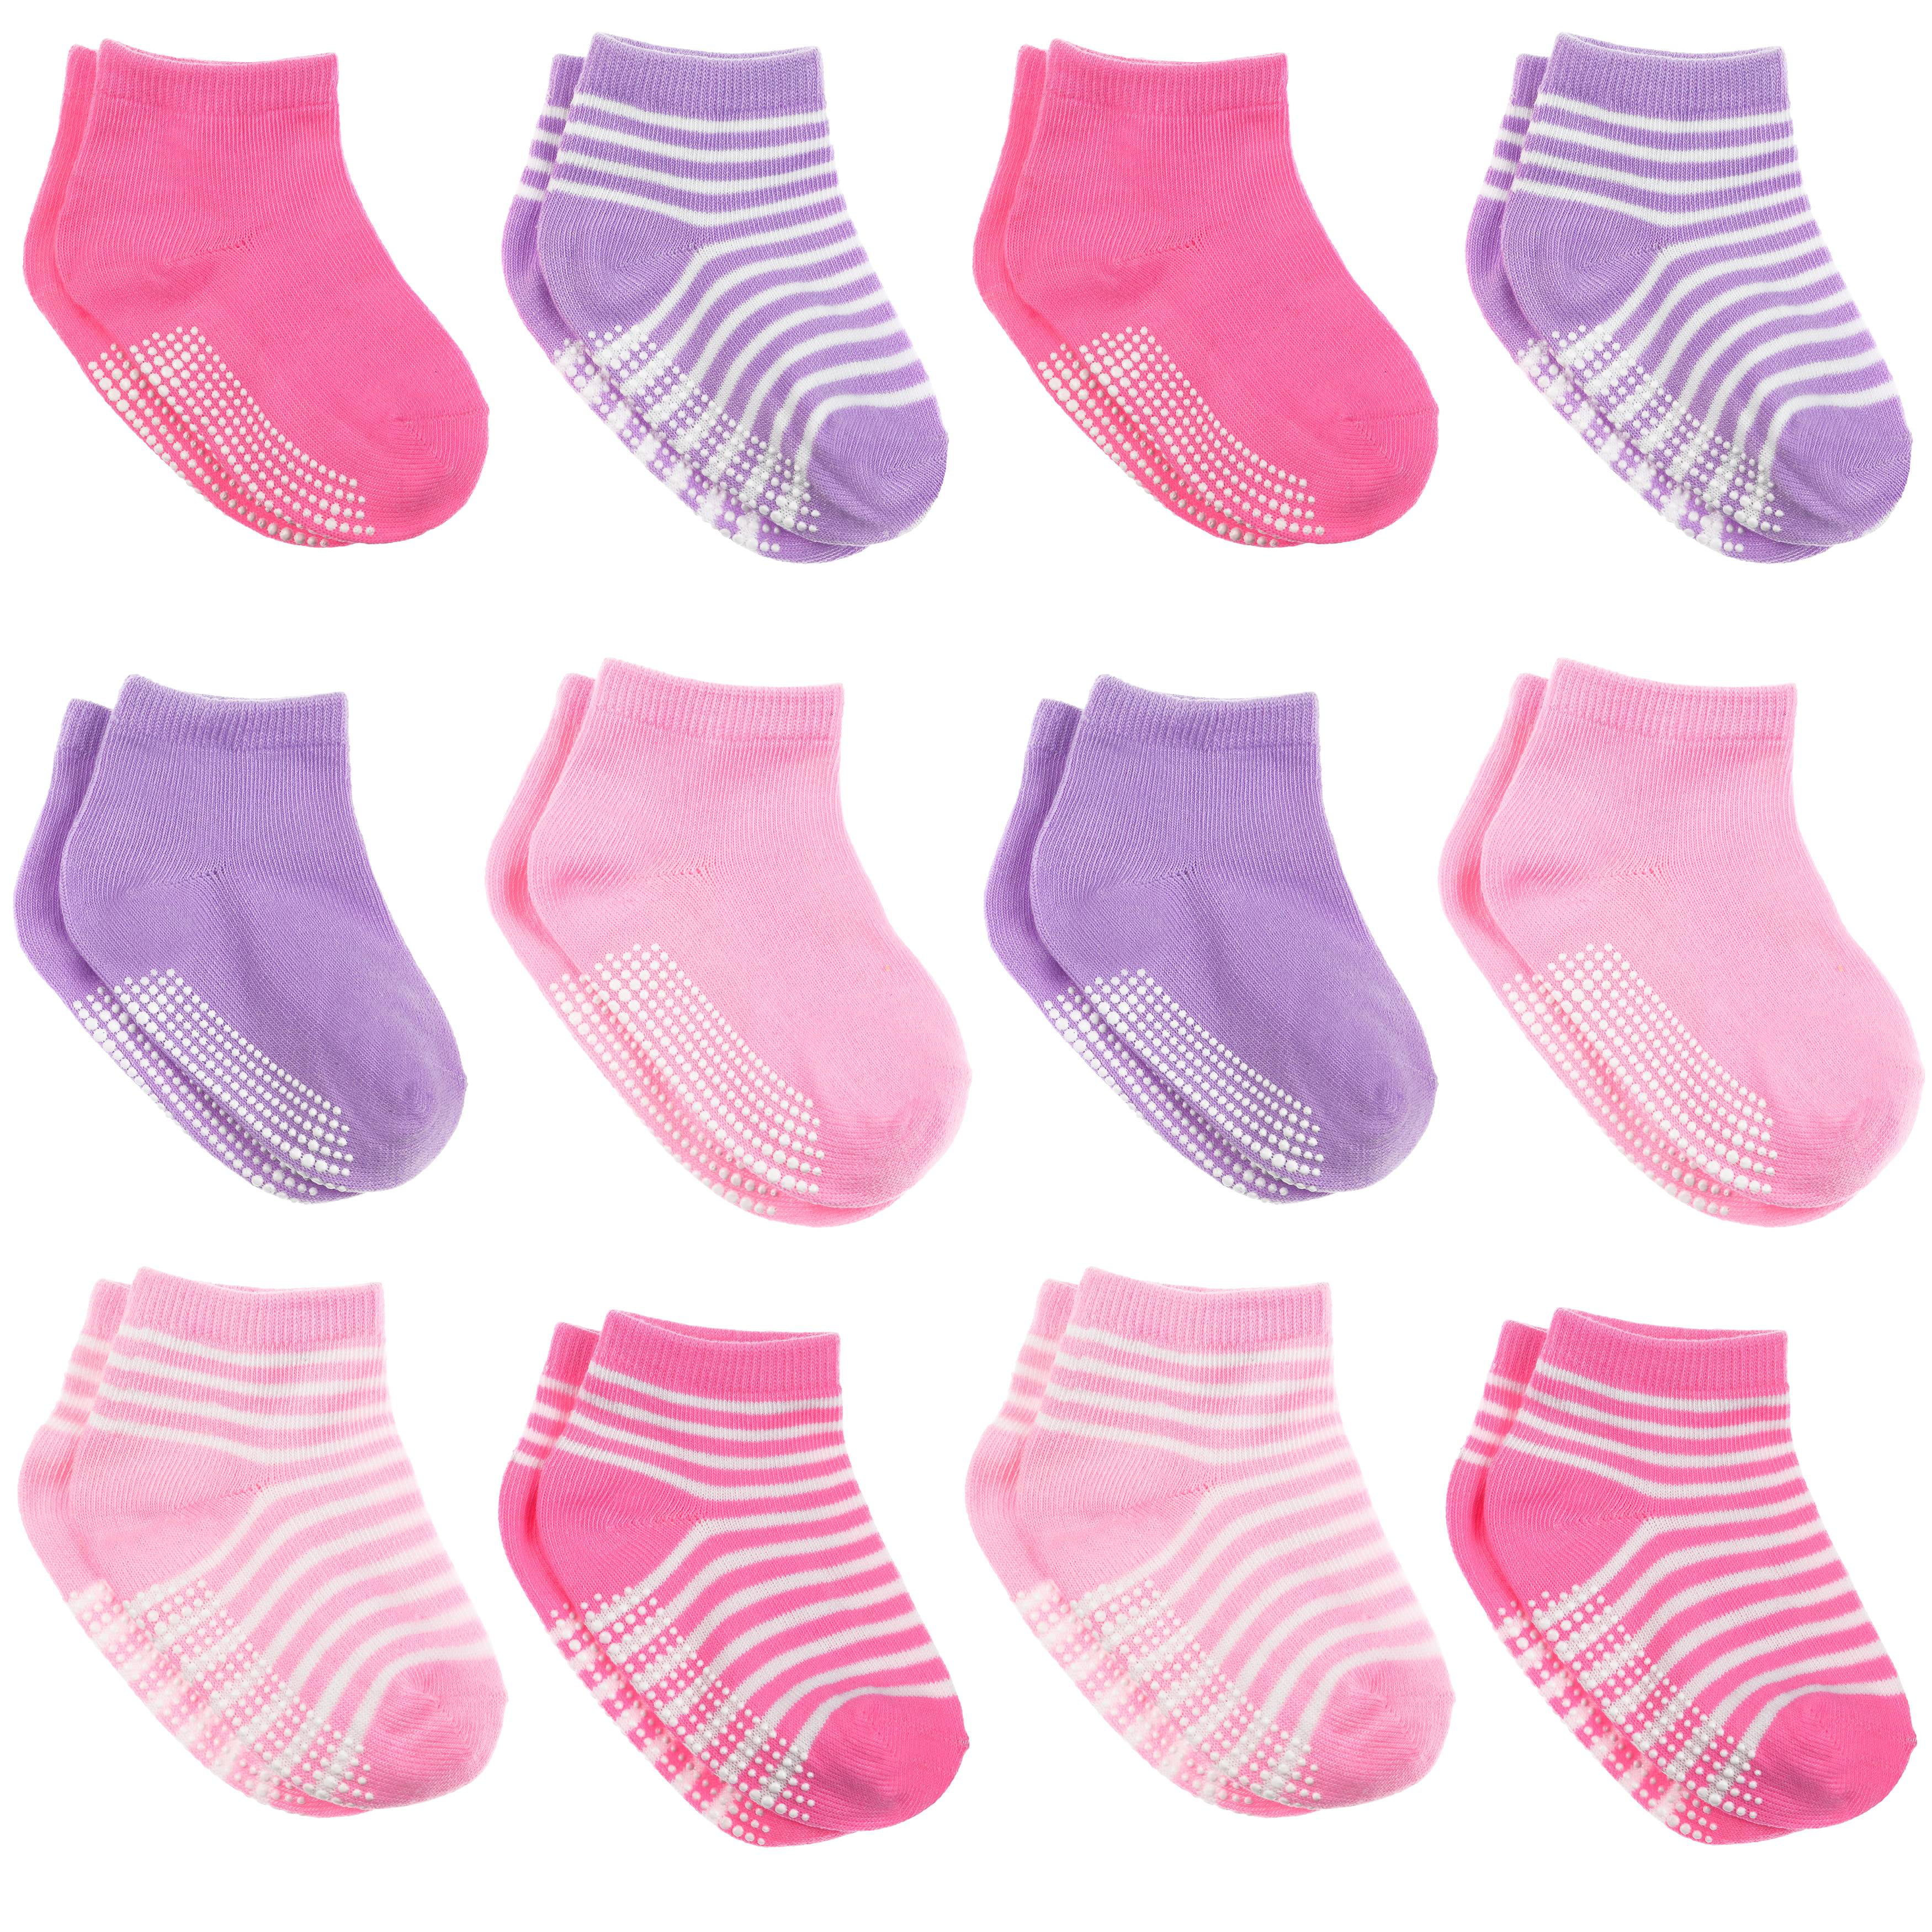 FLYISH DIRECT Baby Non Slip Socks Baby Grip Socks Baby Socks with Grips Summer Anti Skid Socks for Babies Kids Toddler 8 Pairs 1-7 Years）